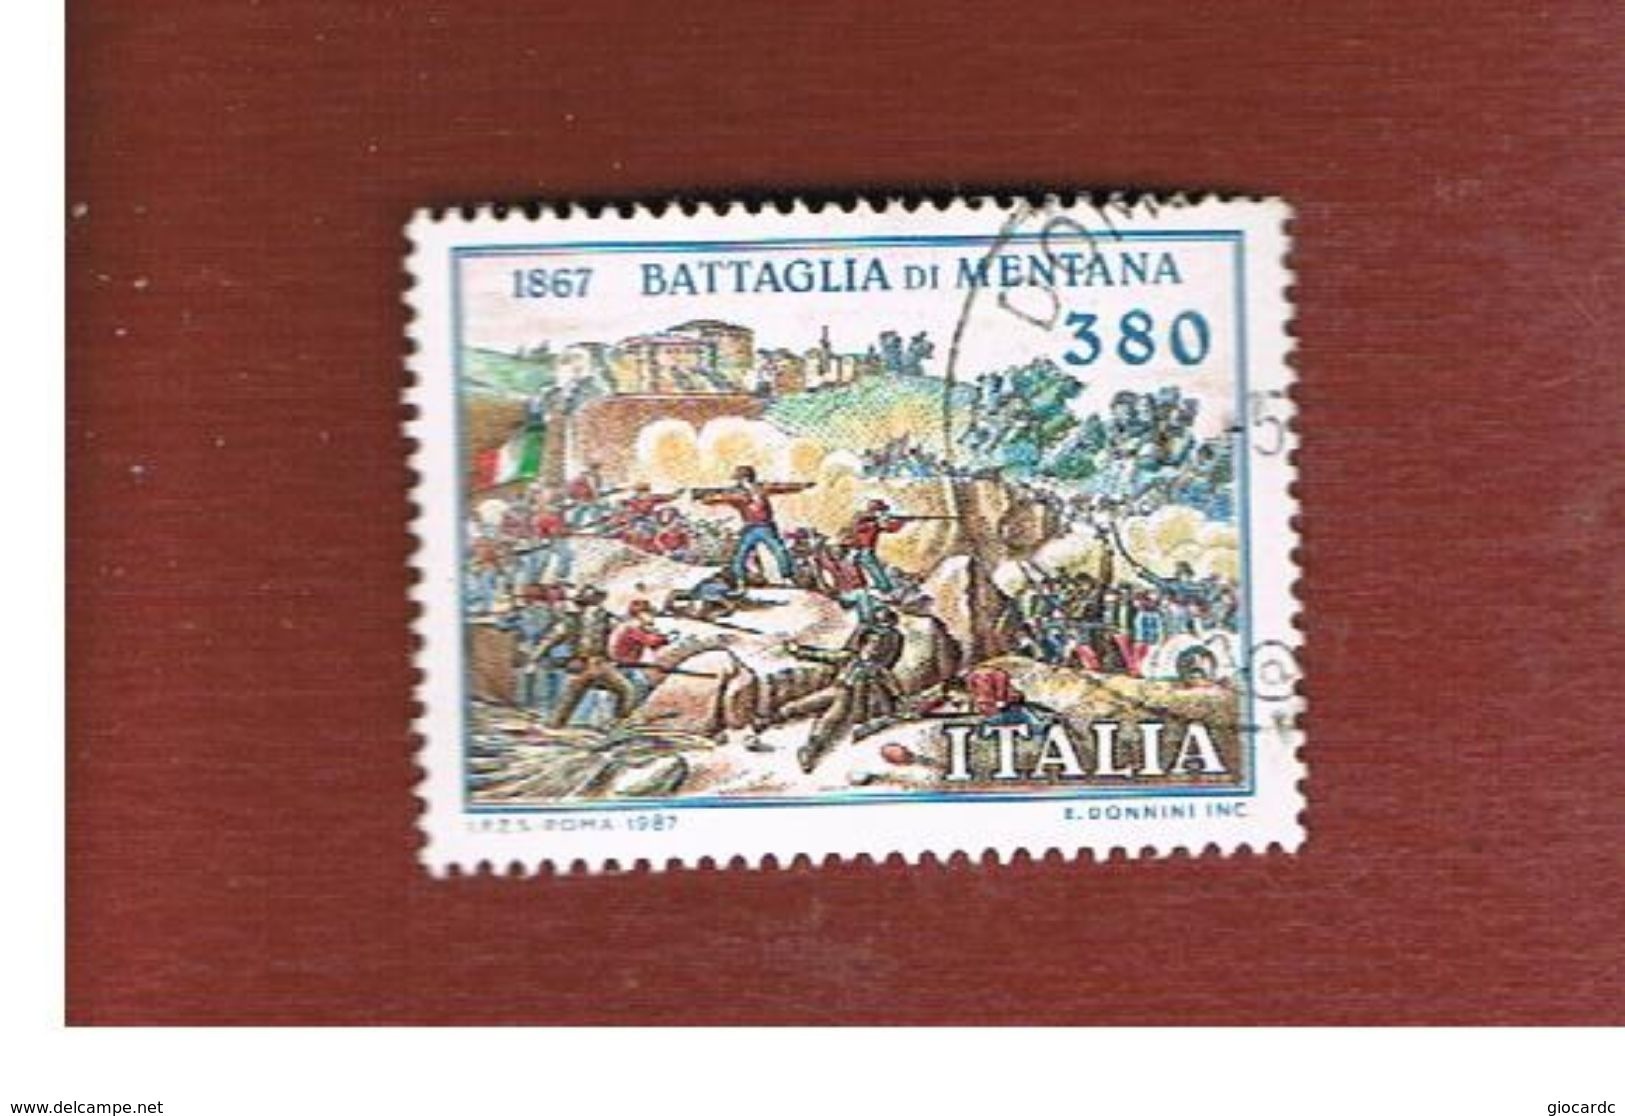 ITALIA REPUBBLICA  - SASS. 1817   -      1987     BATTAGLIA DI MENTANA     -      USATO - 1981-90: Usados